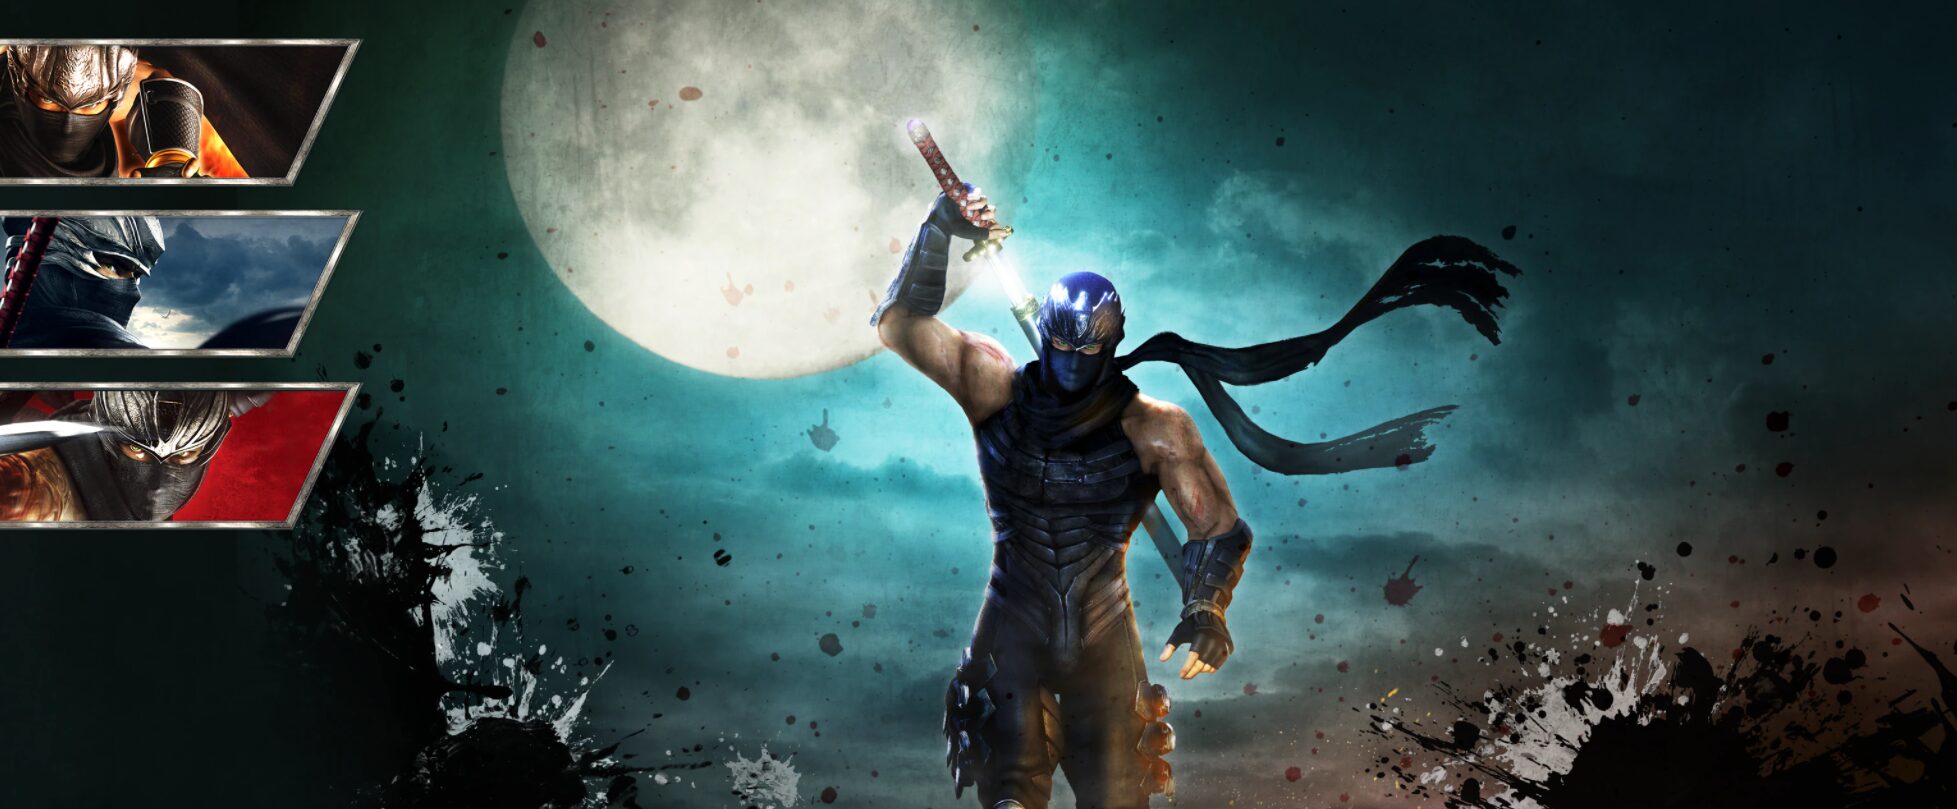 Ninja Gaiden Games And 4 More Great Ninja Movies